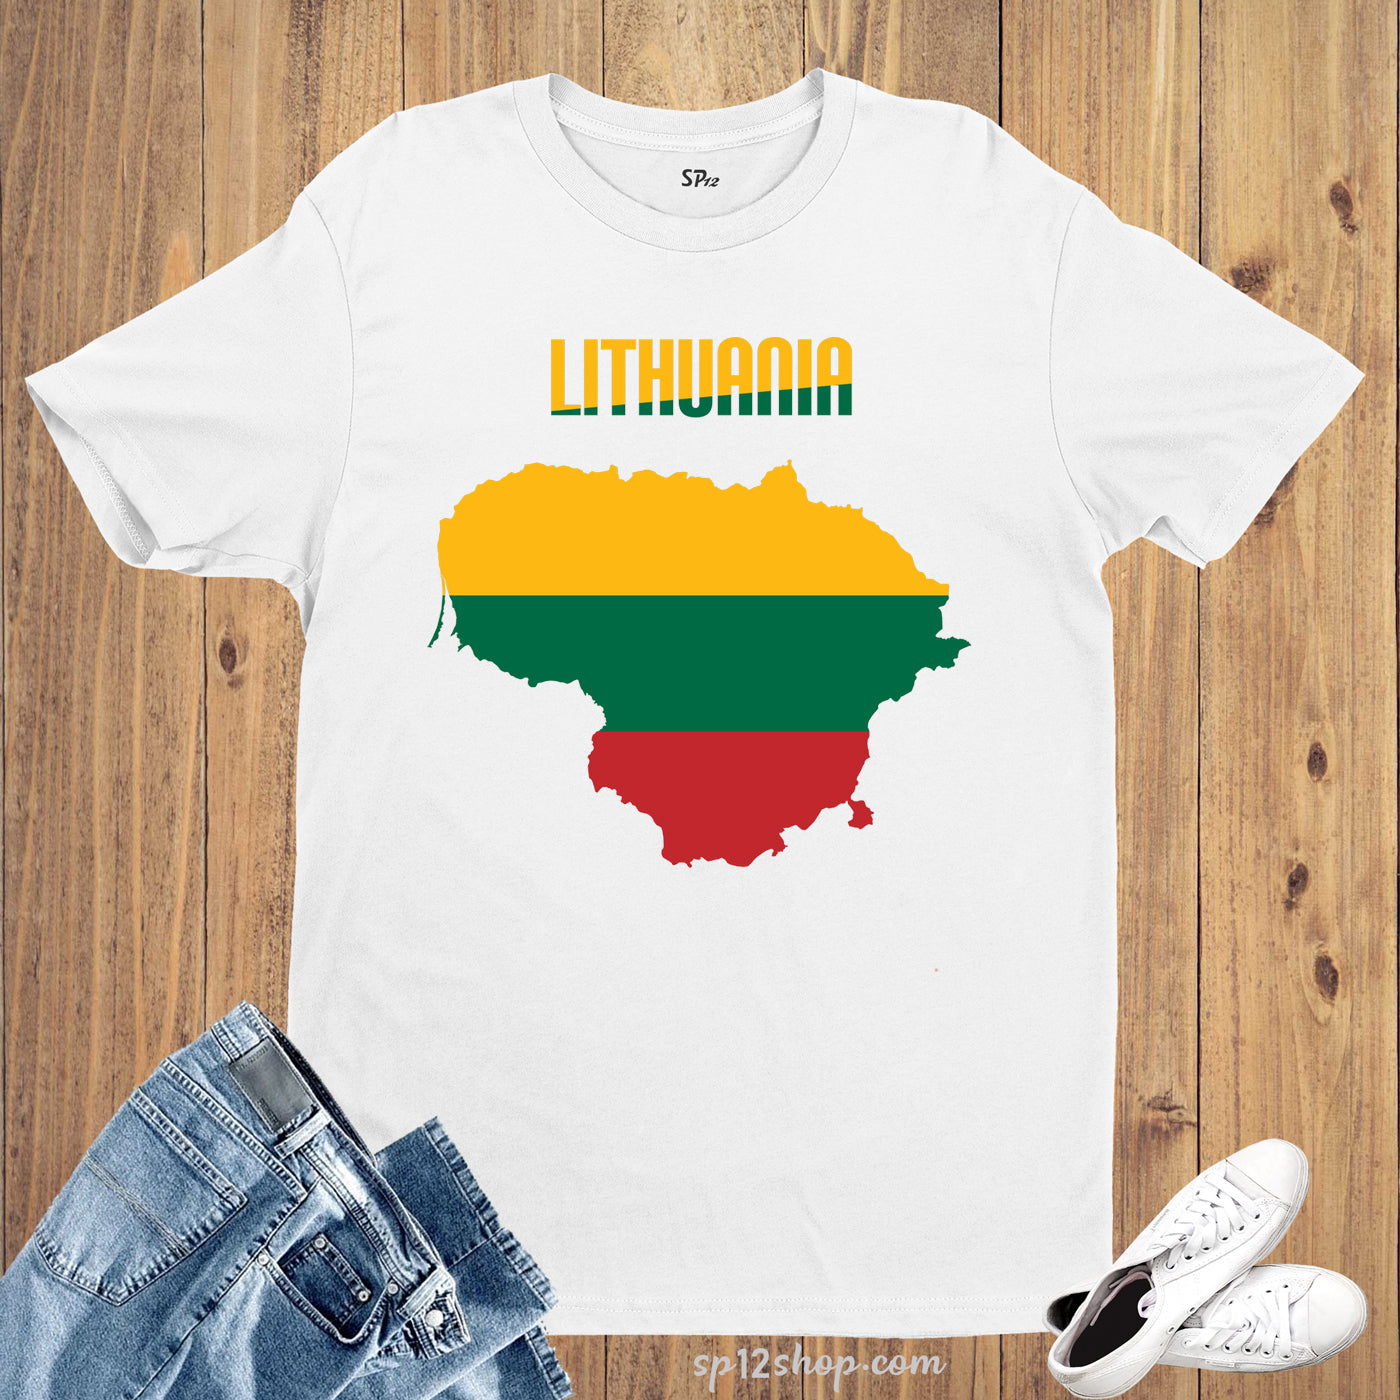 Lithuania Flag T Shirt Olympics FIFA World Cup Country Flag Tee Shirt